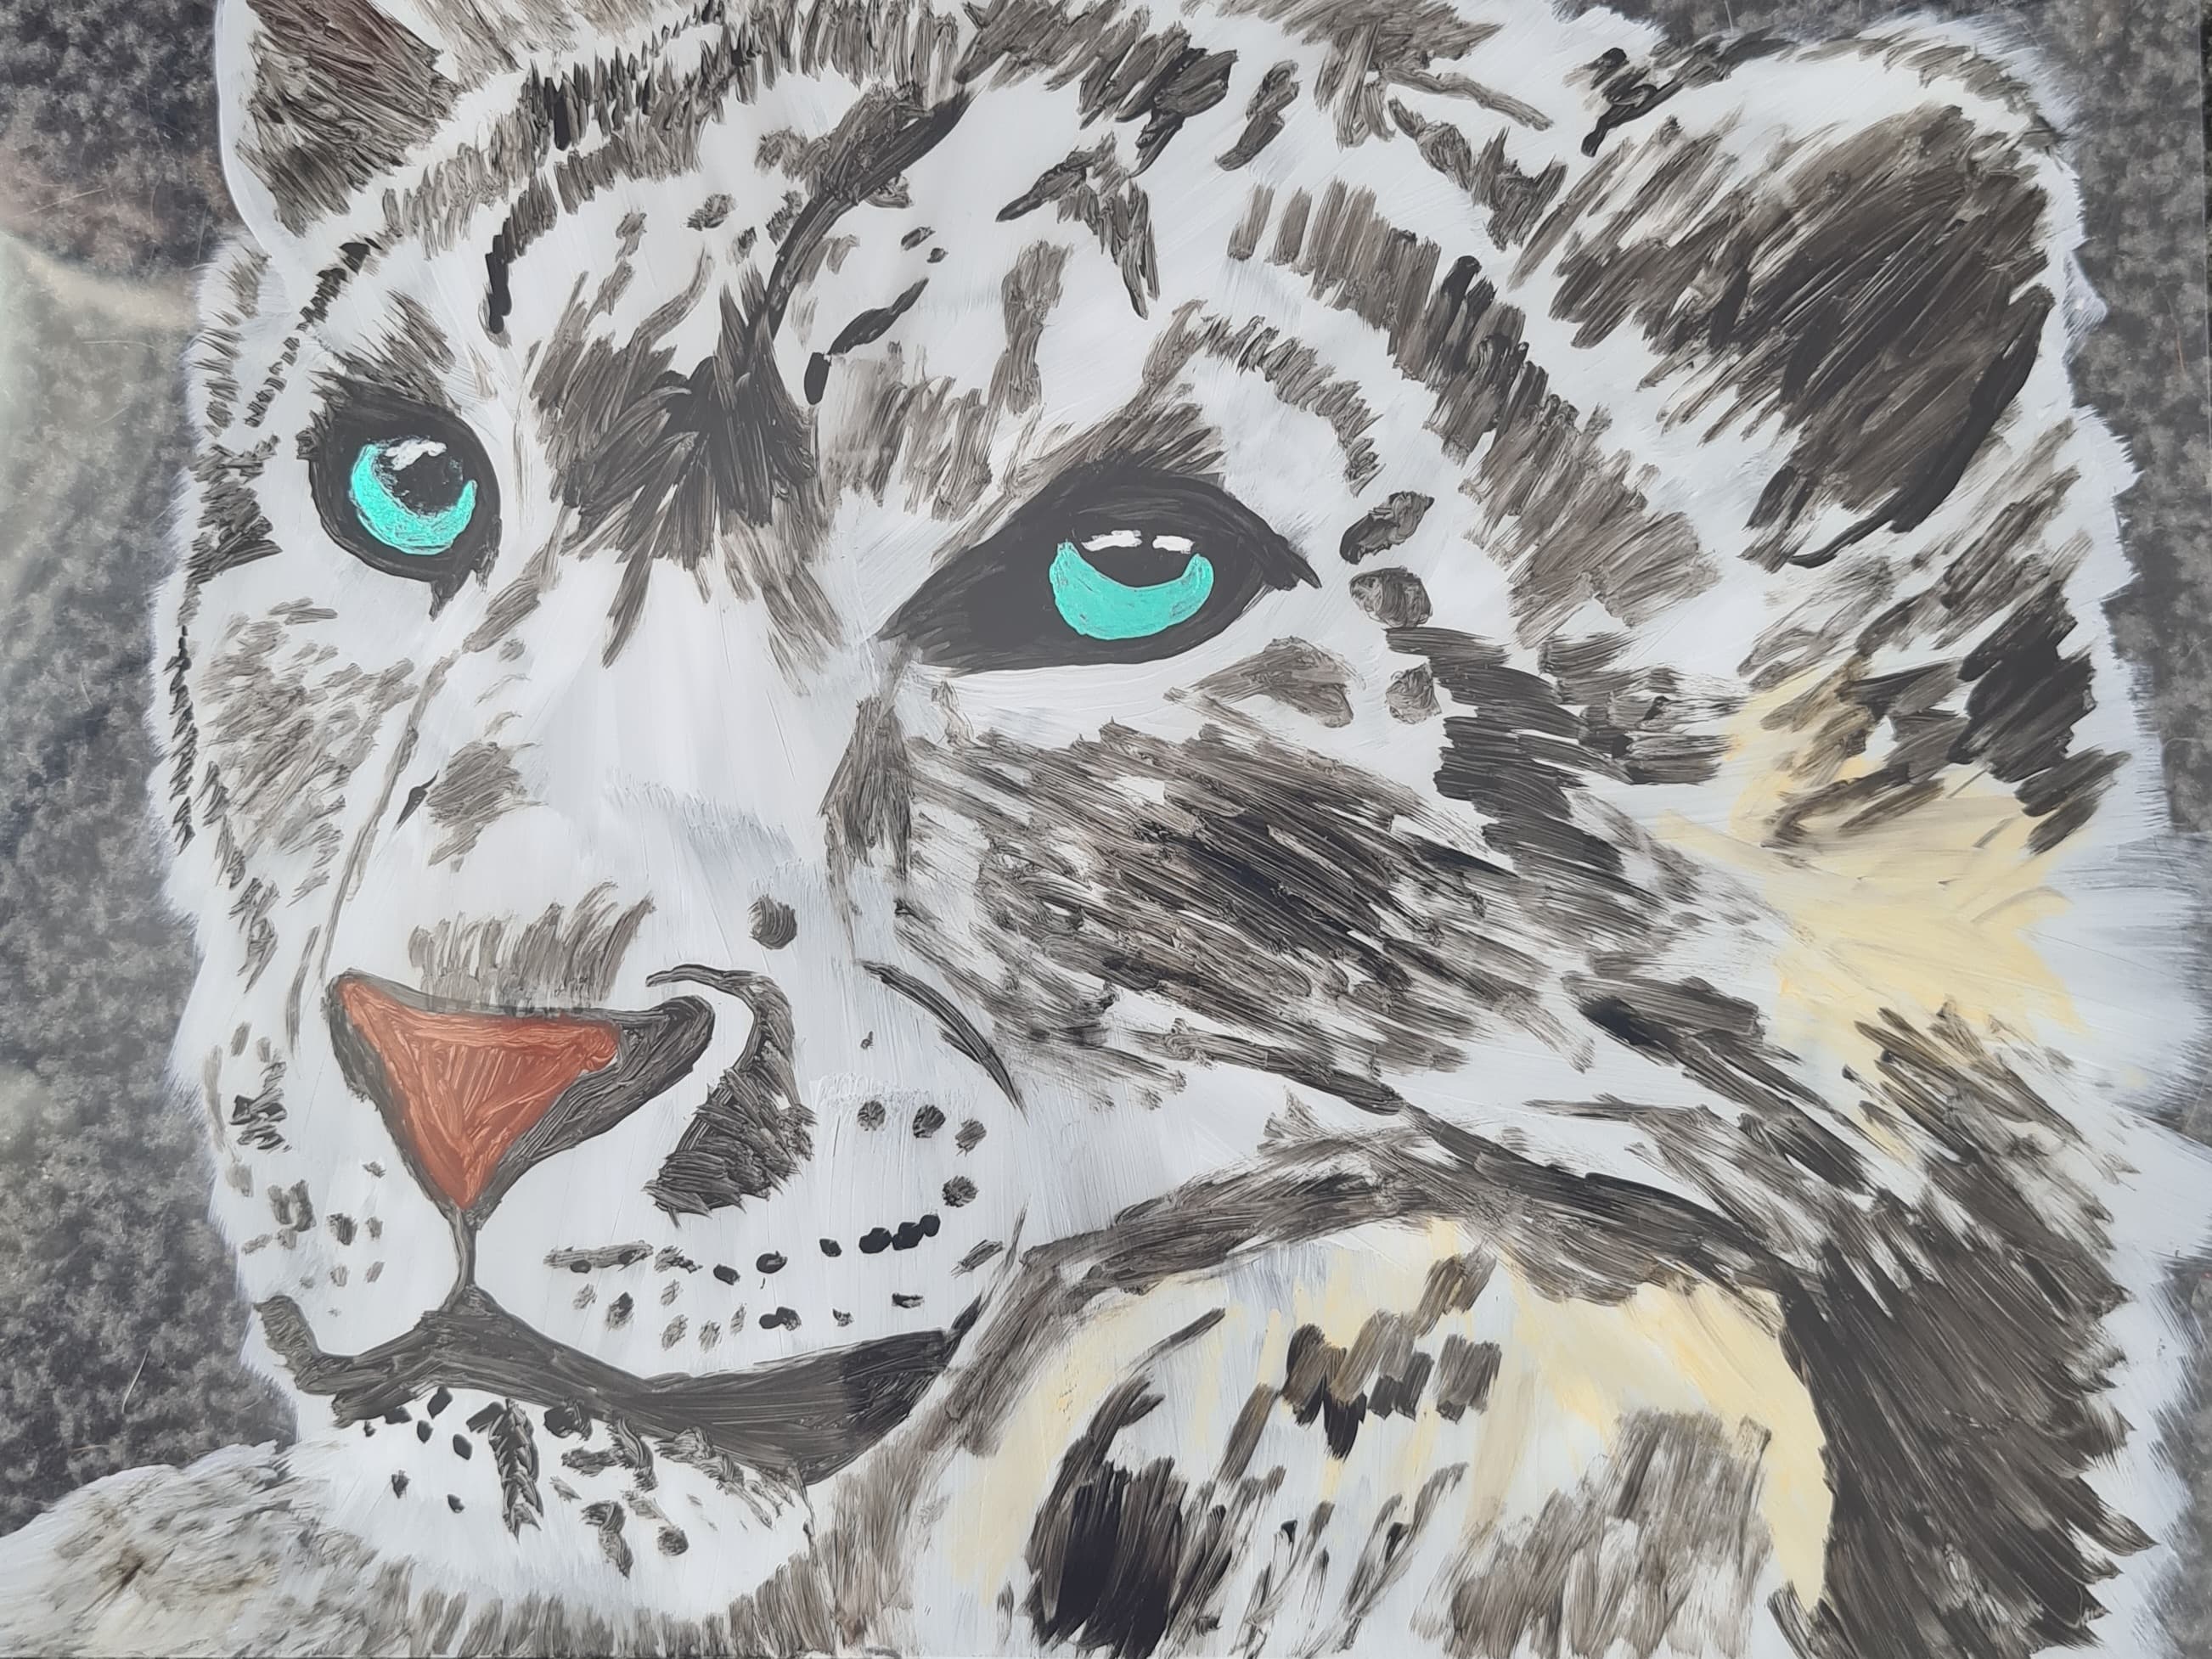 Snow Leopard- Metallic eyed snow leopard acrylic painting